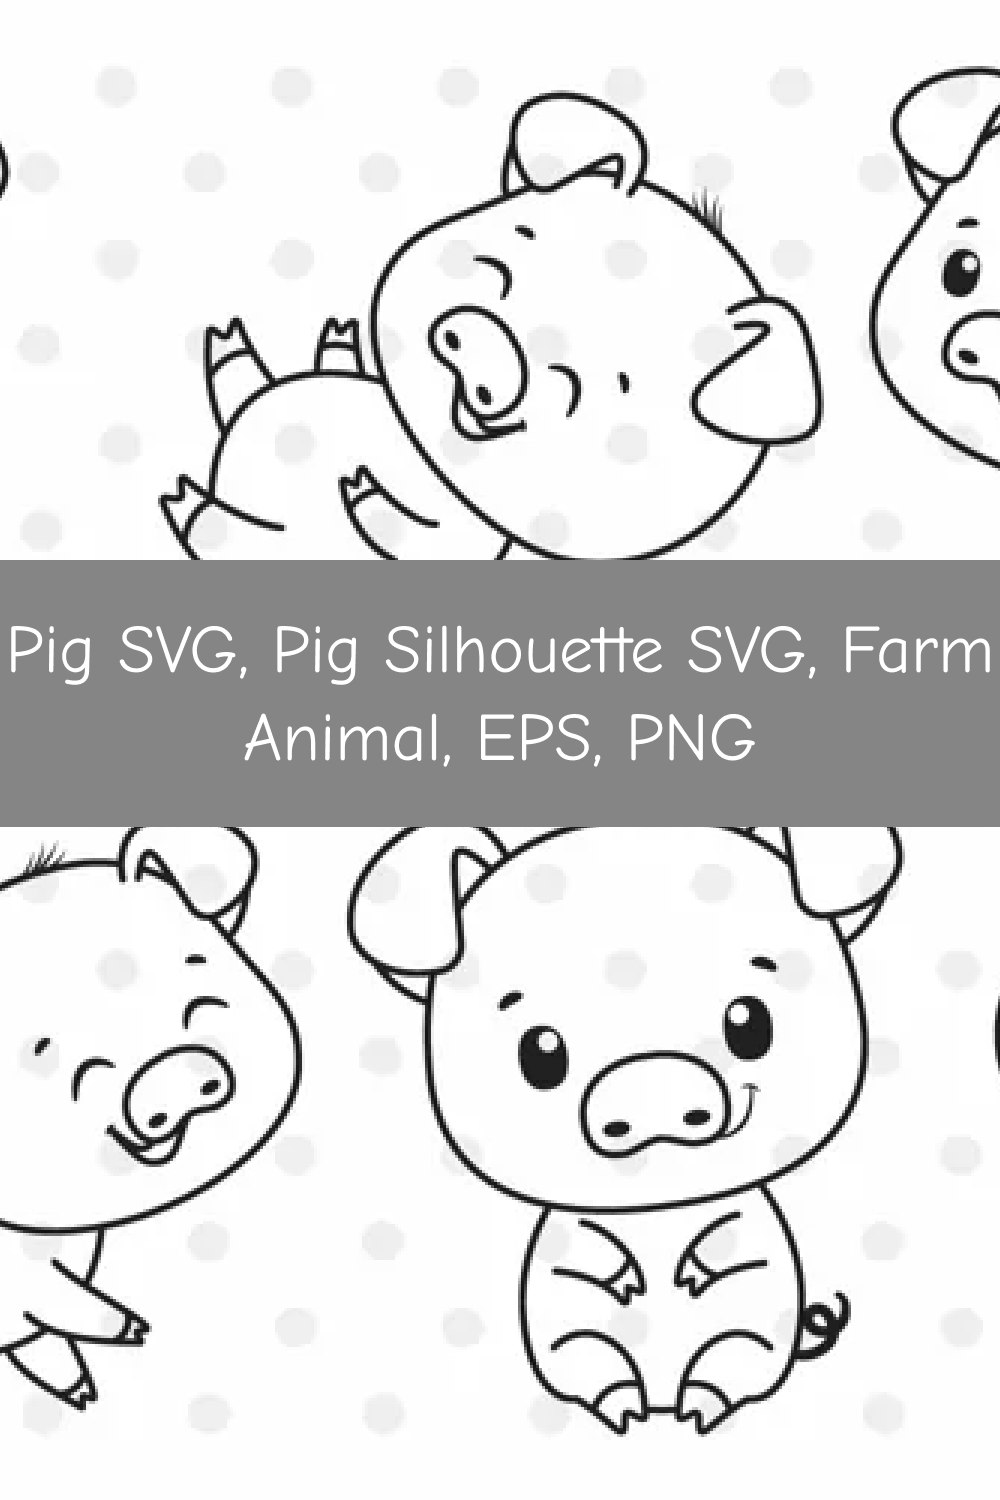 Pig SVG, Pig Silhouette SVG, Farm Animal, EPS, PNG.